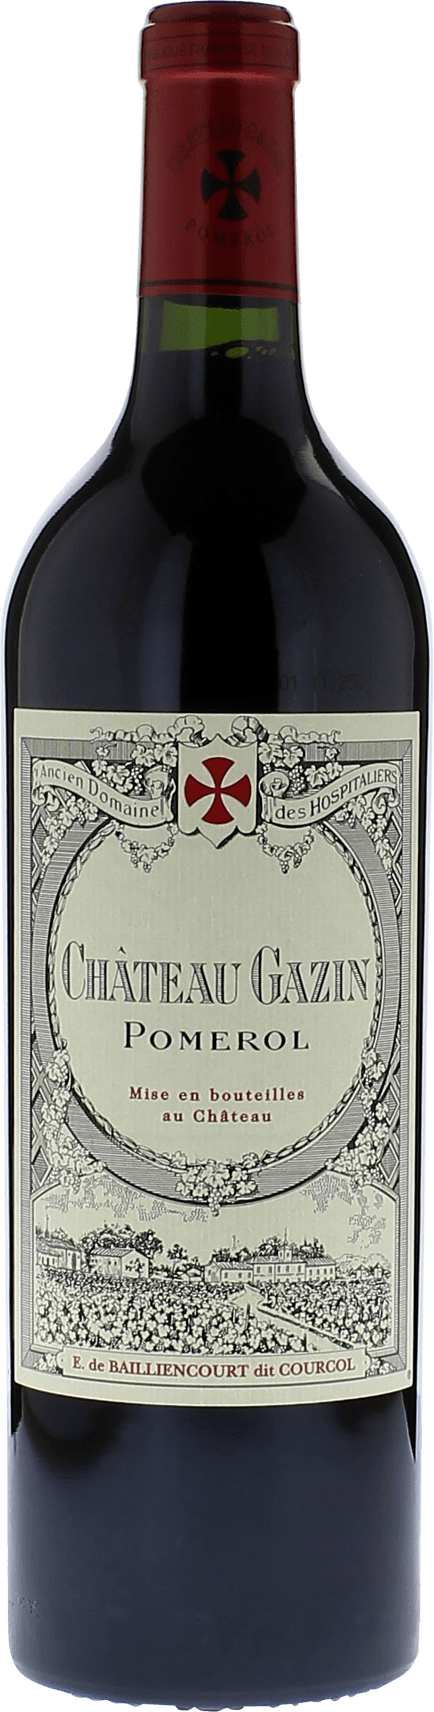 Gazin 1995  Pomerol, Bordeaux rouge